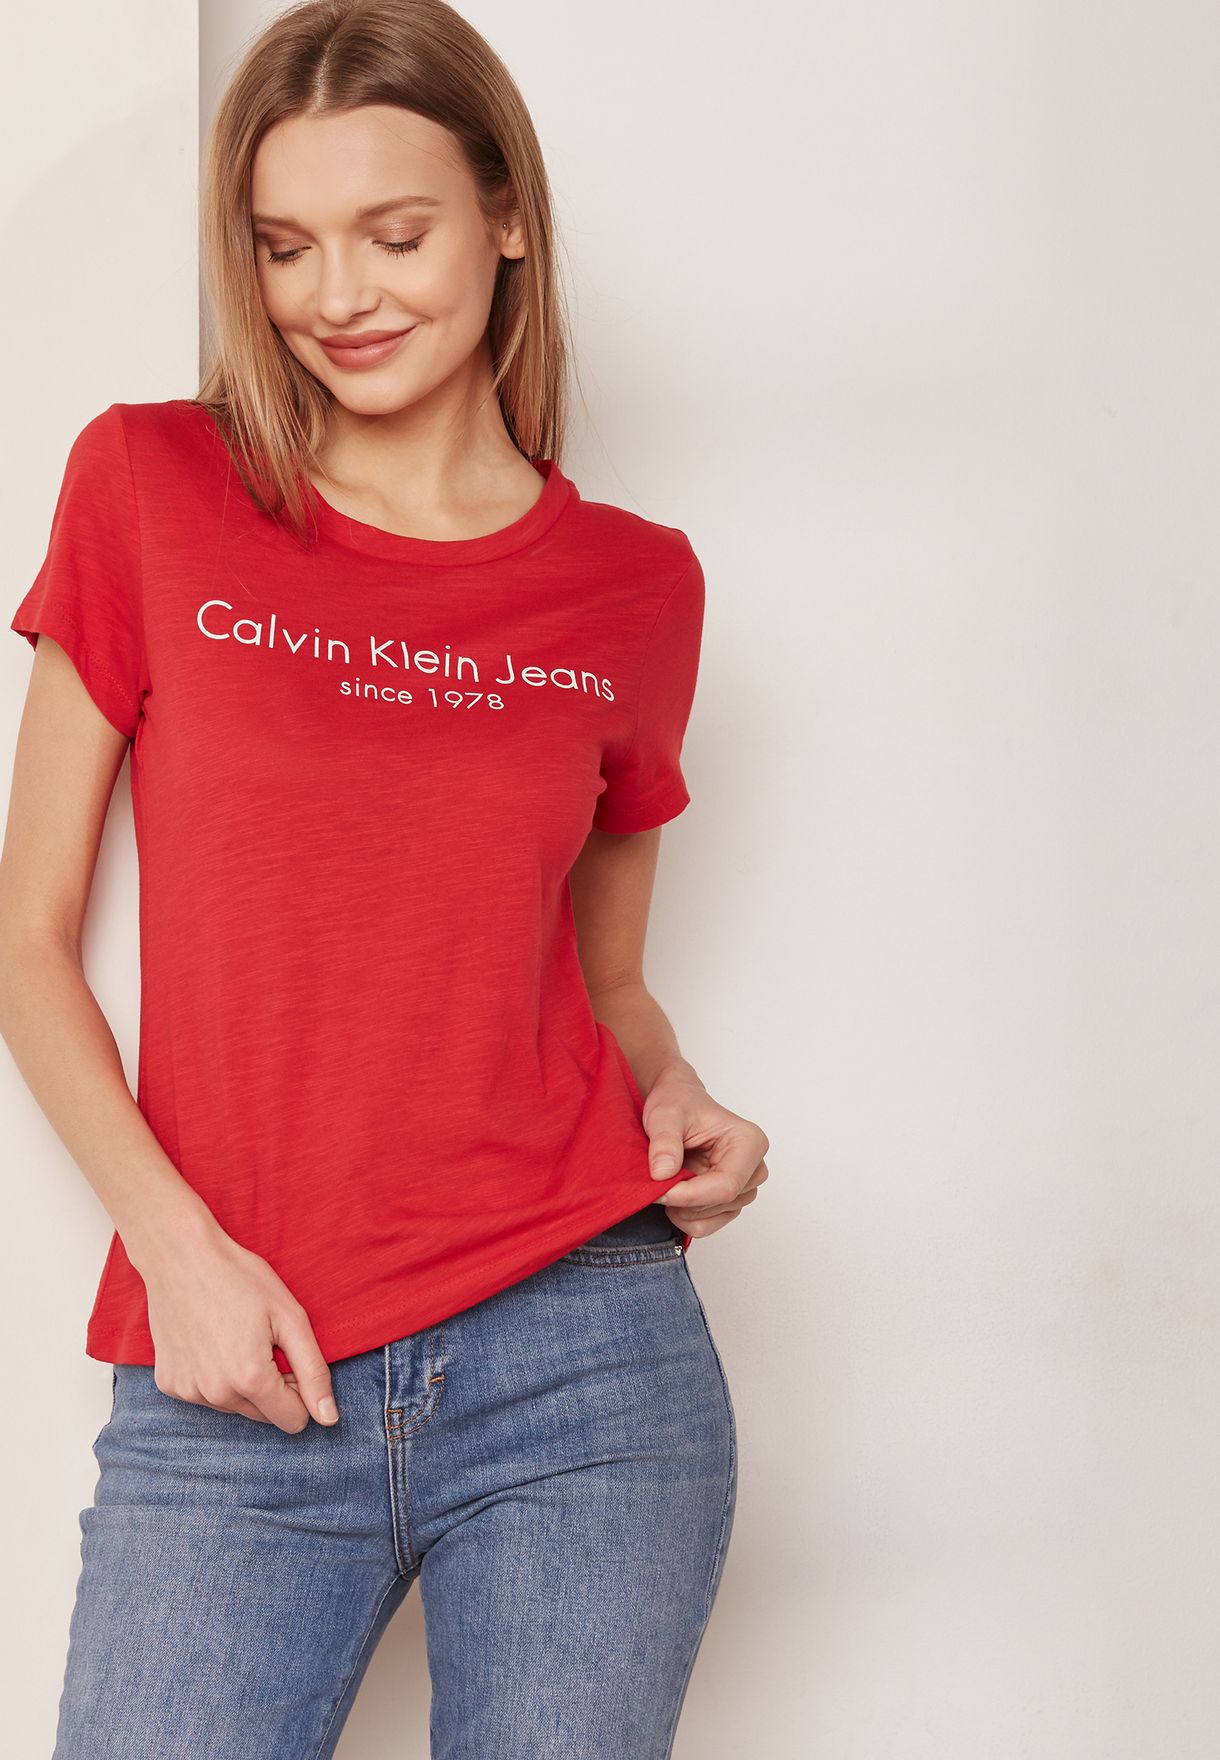 calvin klein red t shirt womens